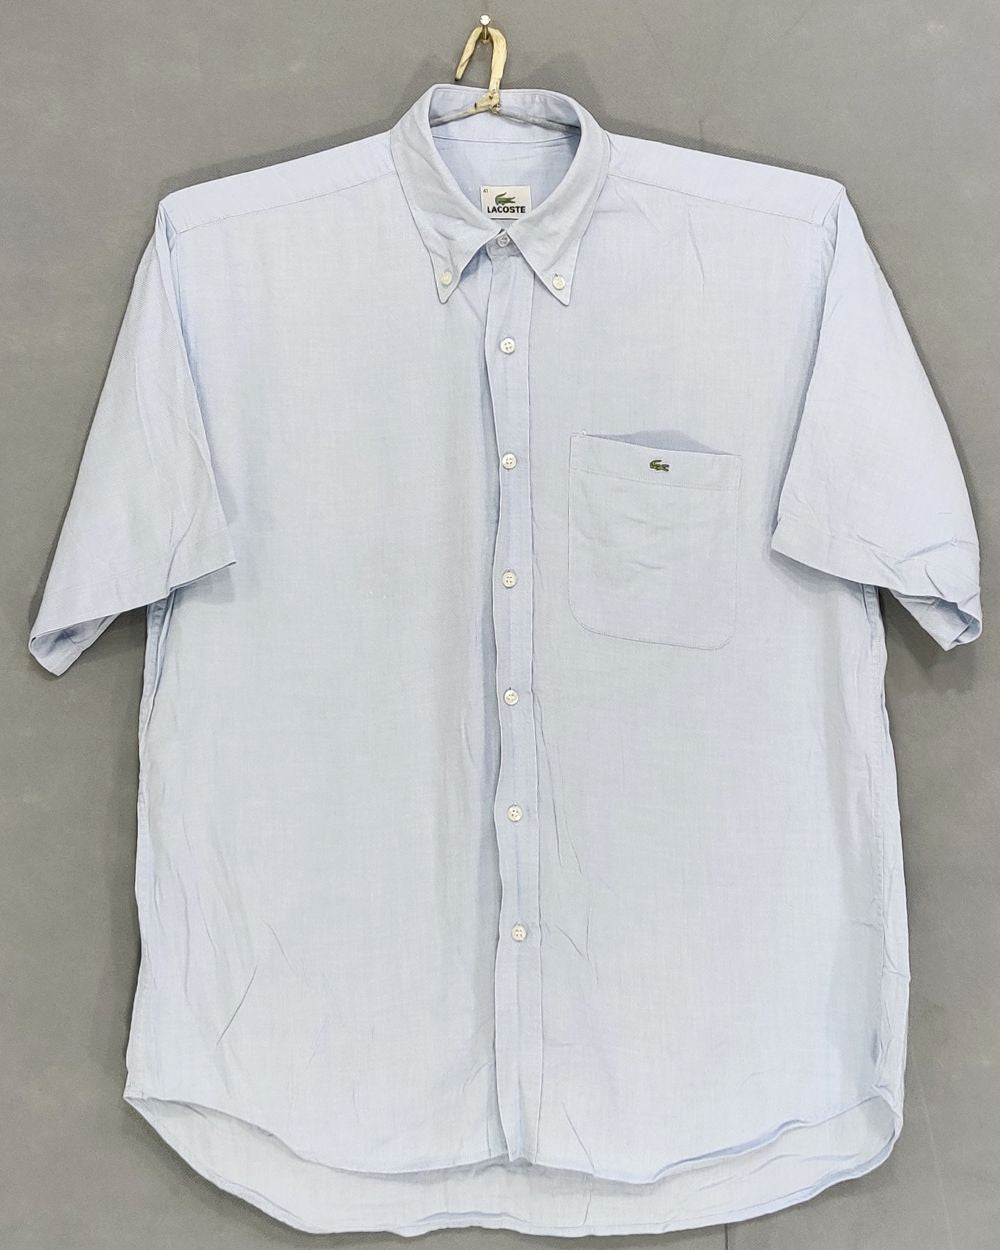 Lacoste Branded Original Cotton Shirt For Men